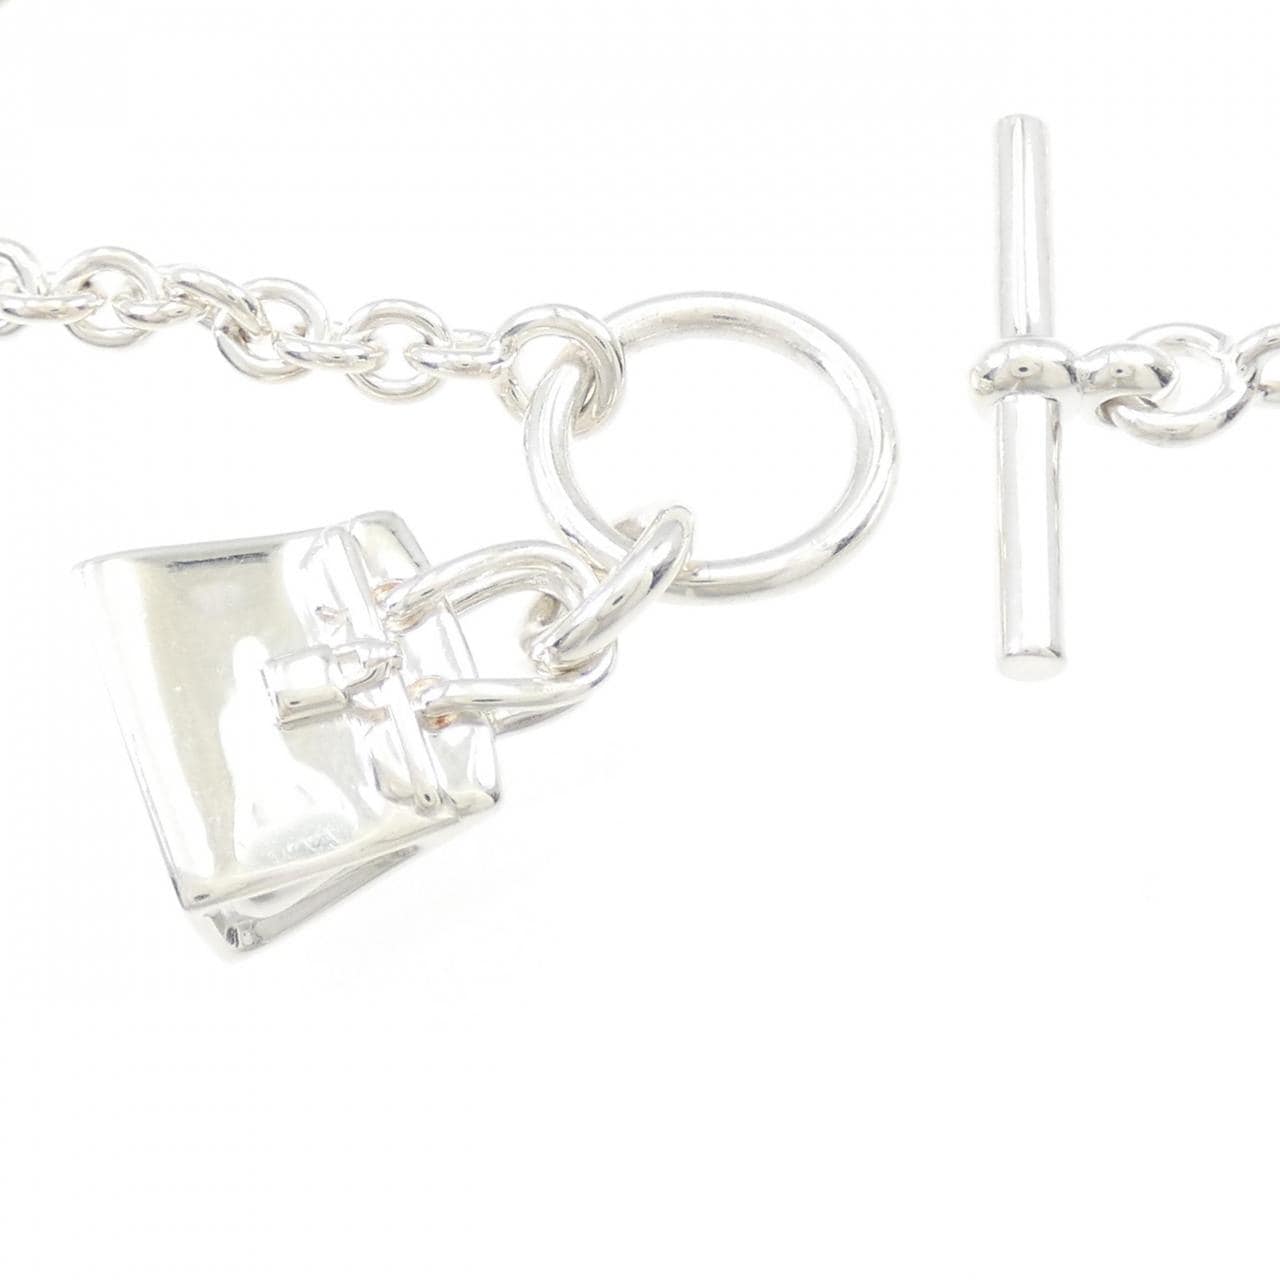 HERMES amulettes Birkin bracelet